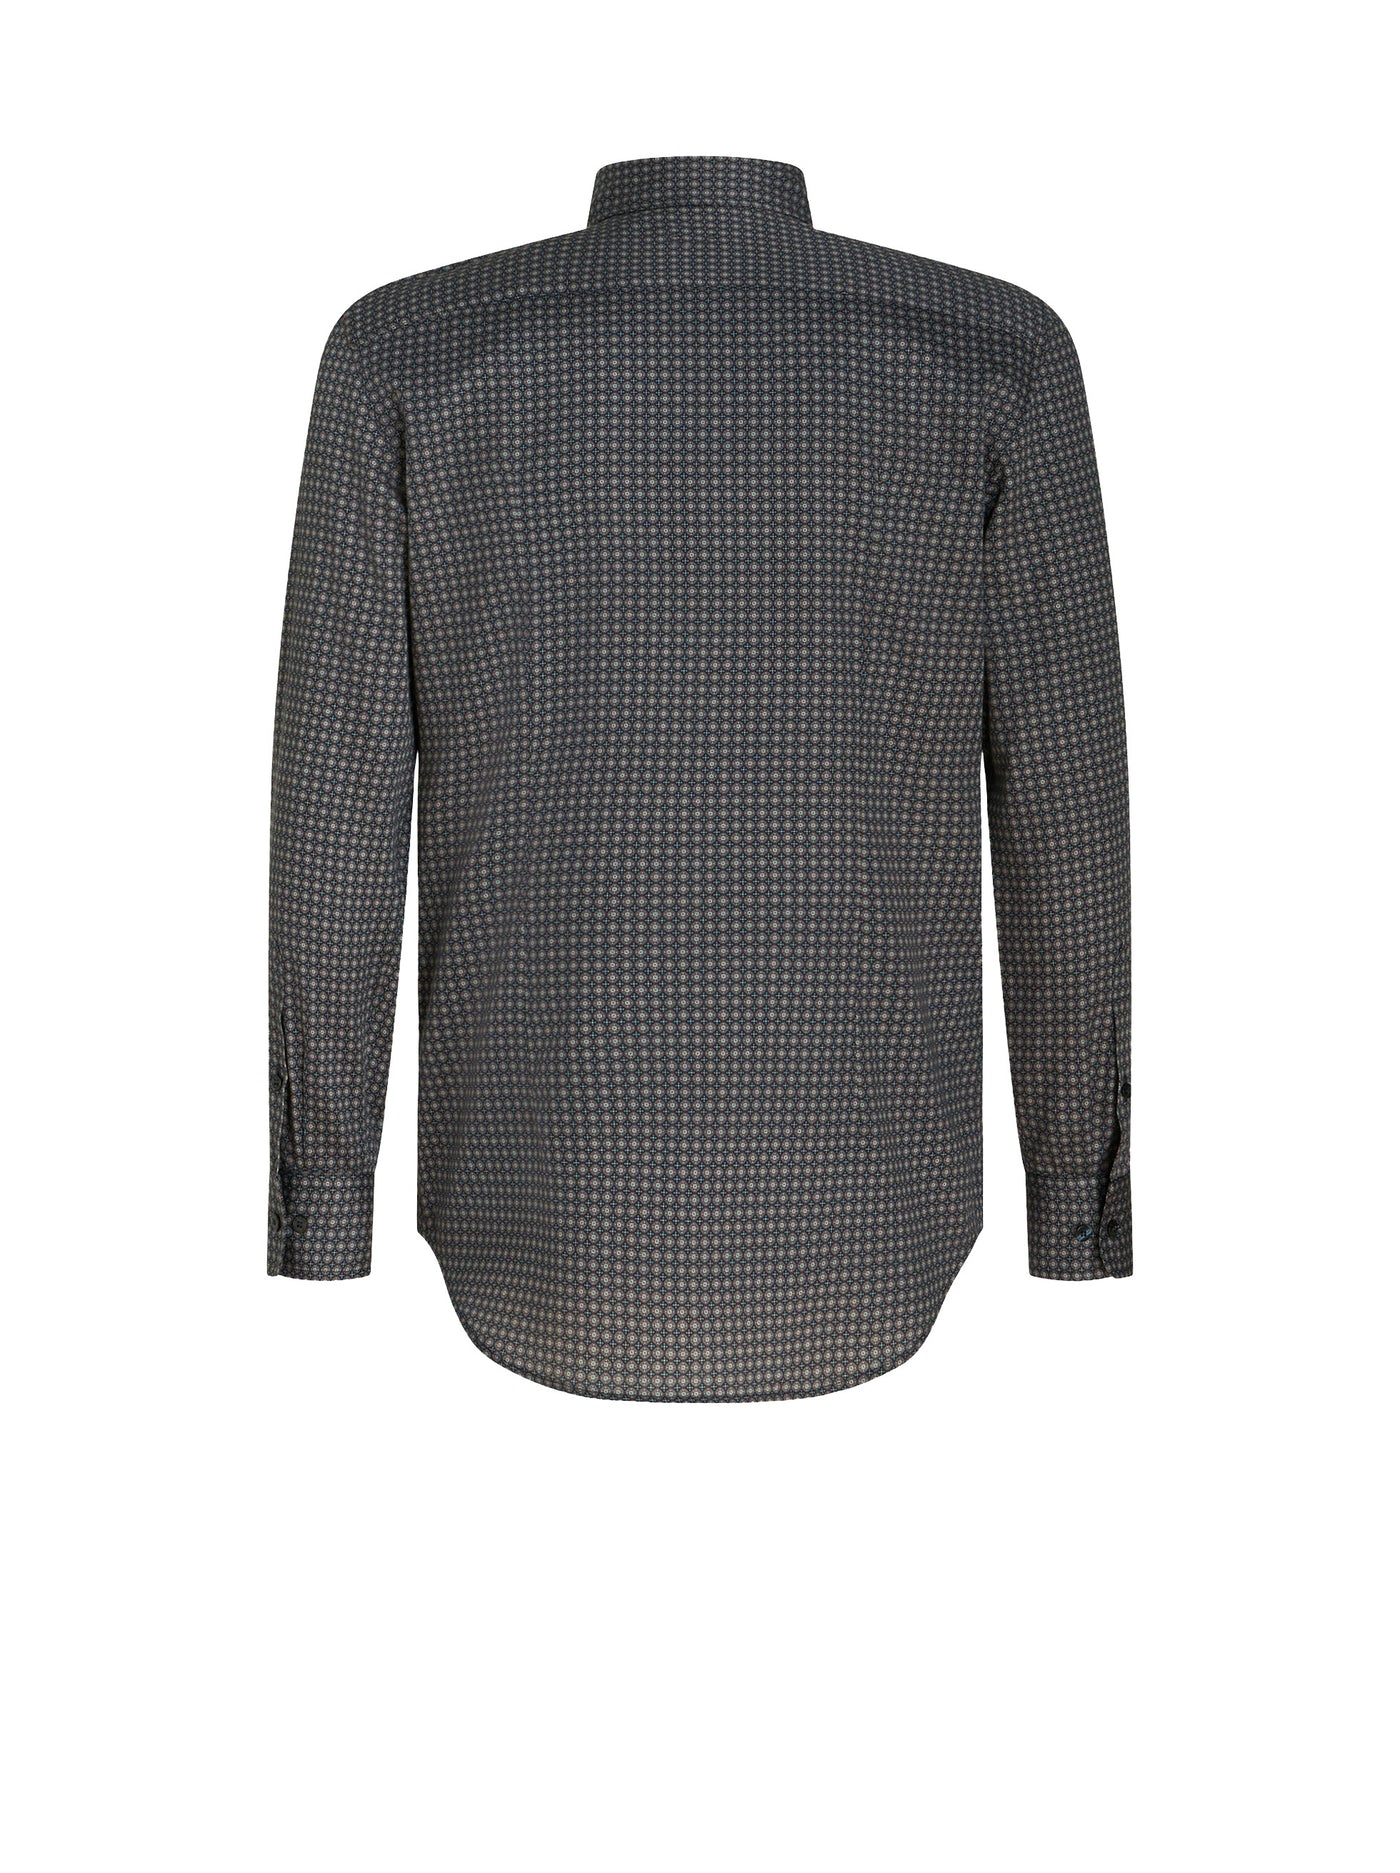 ETRO Geometric Print Dress Shirt | Navy Brown